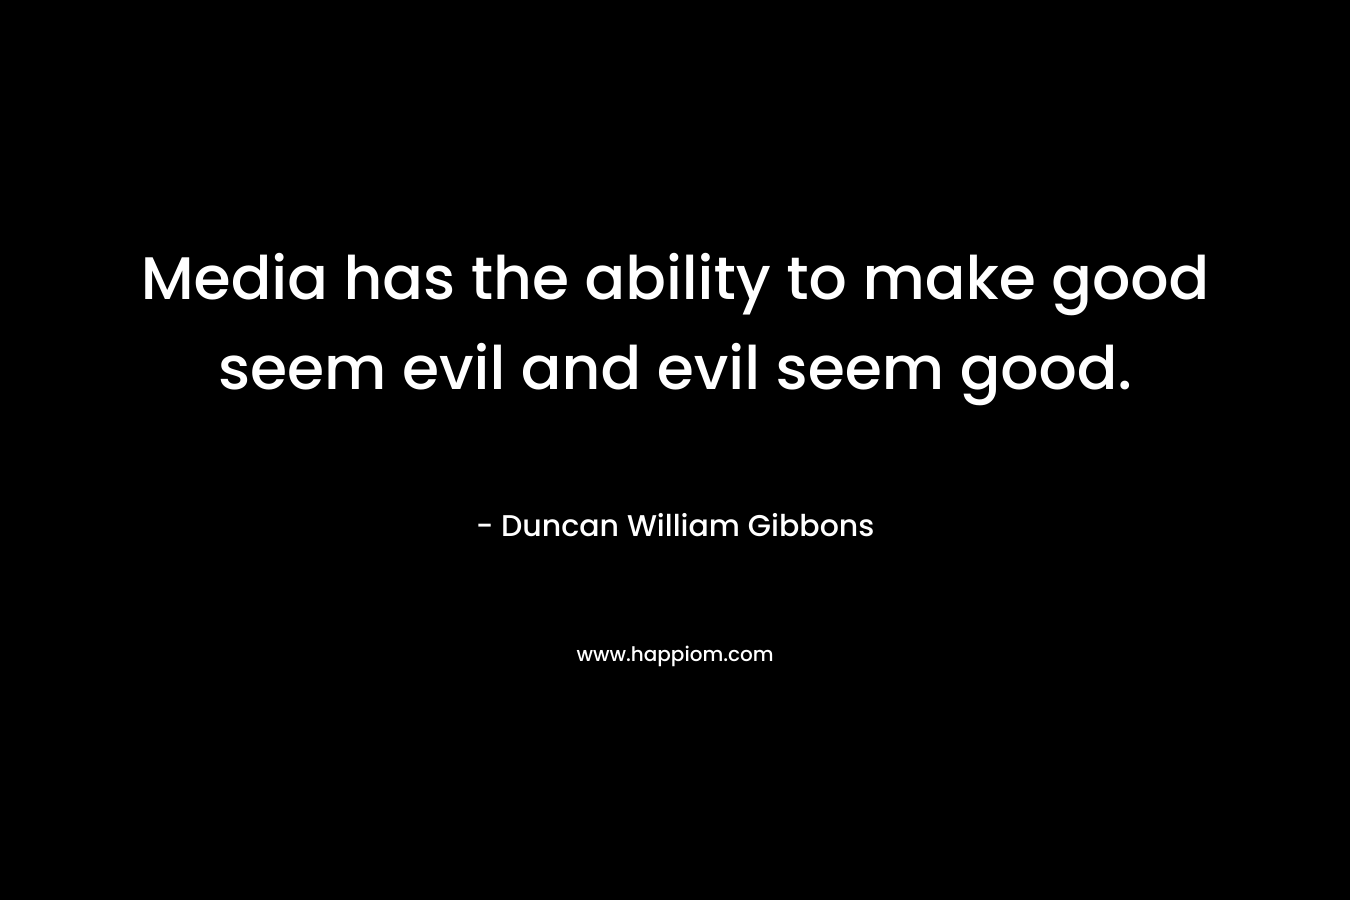 Media has the ability to make good seem evil and evil seem good.